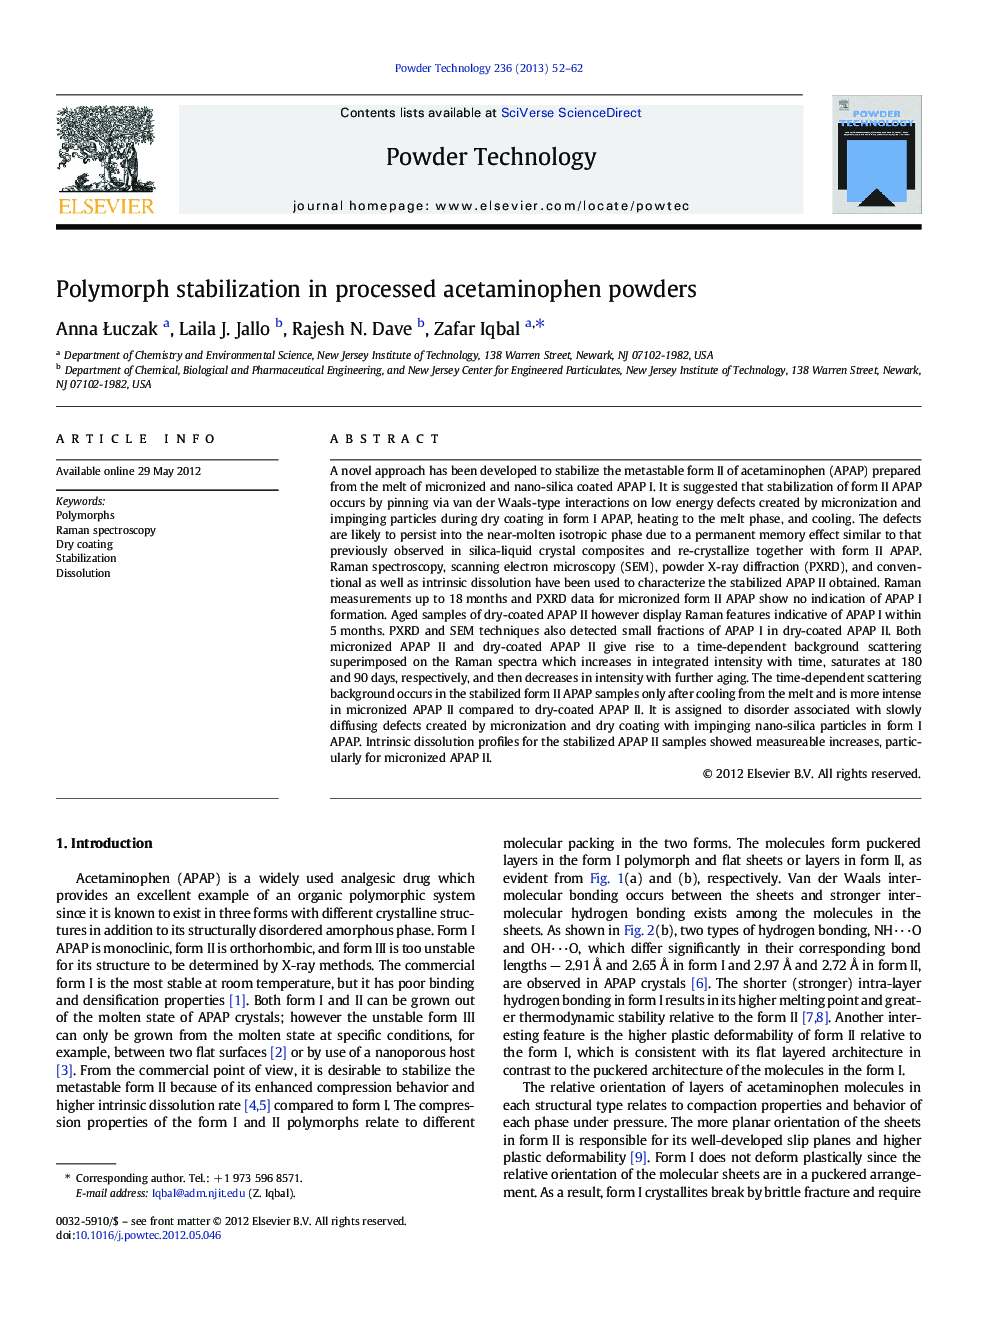 Polymorph stabilization in processed acetaminophen powders